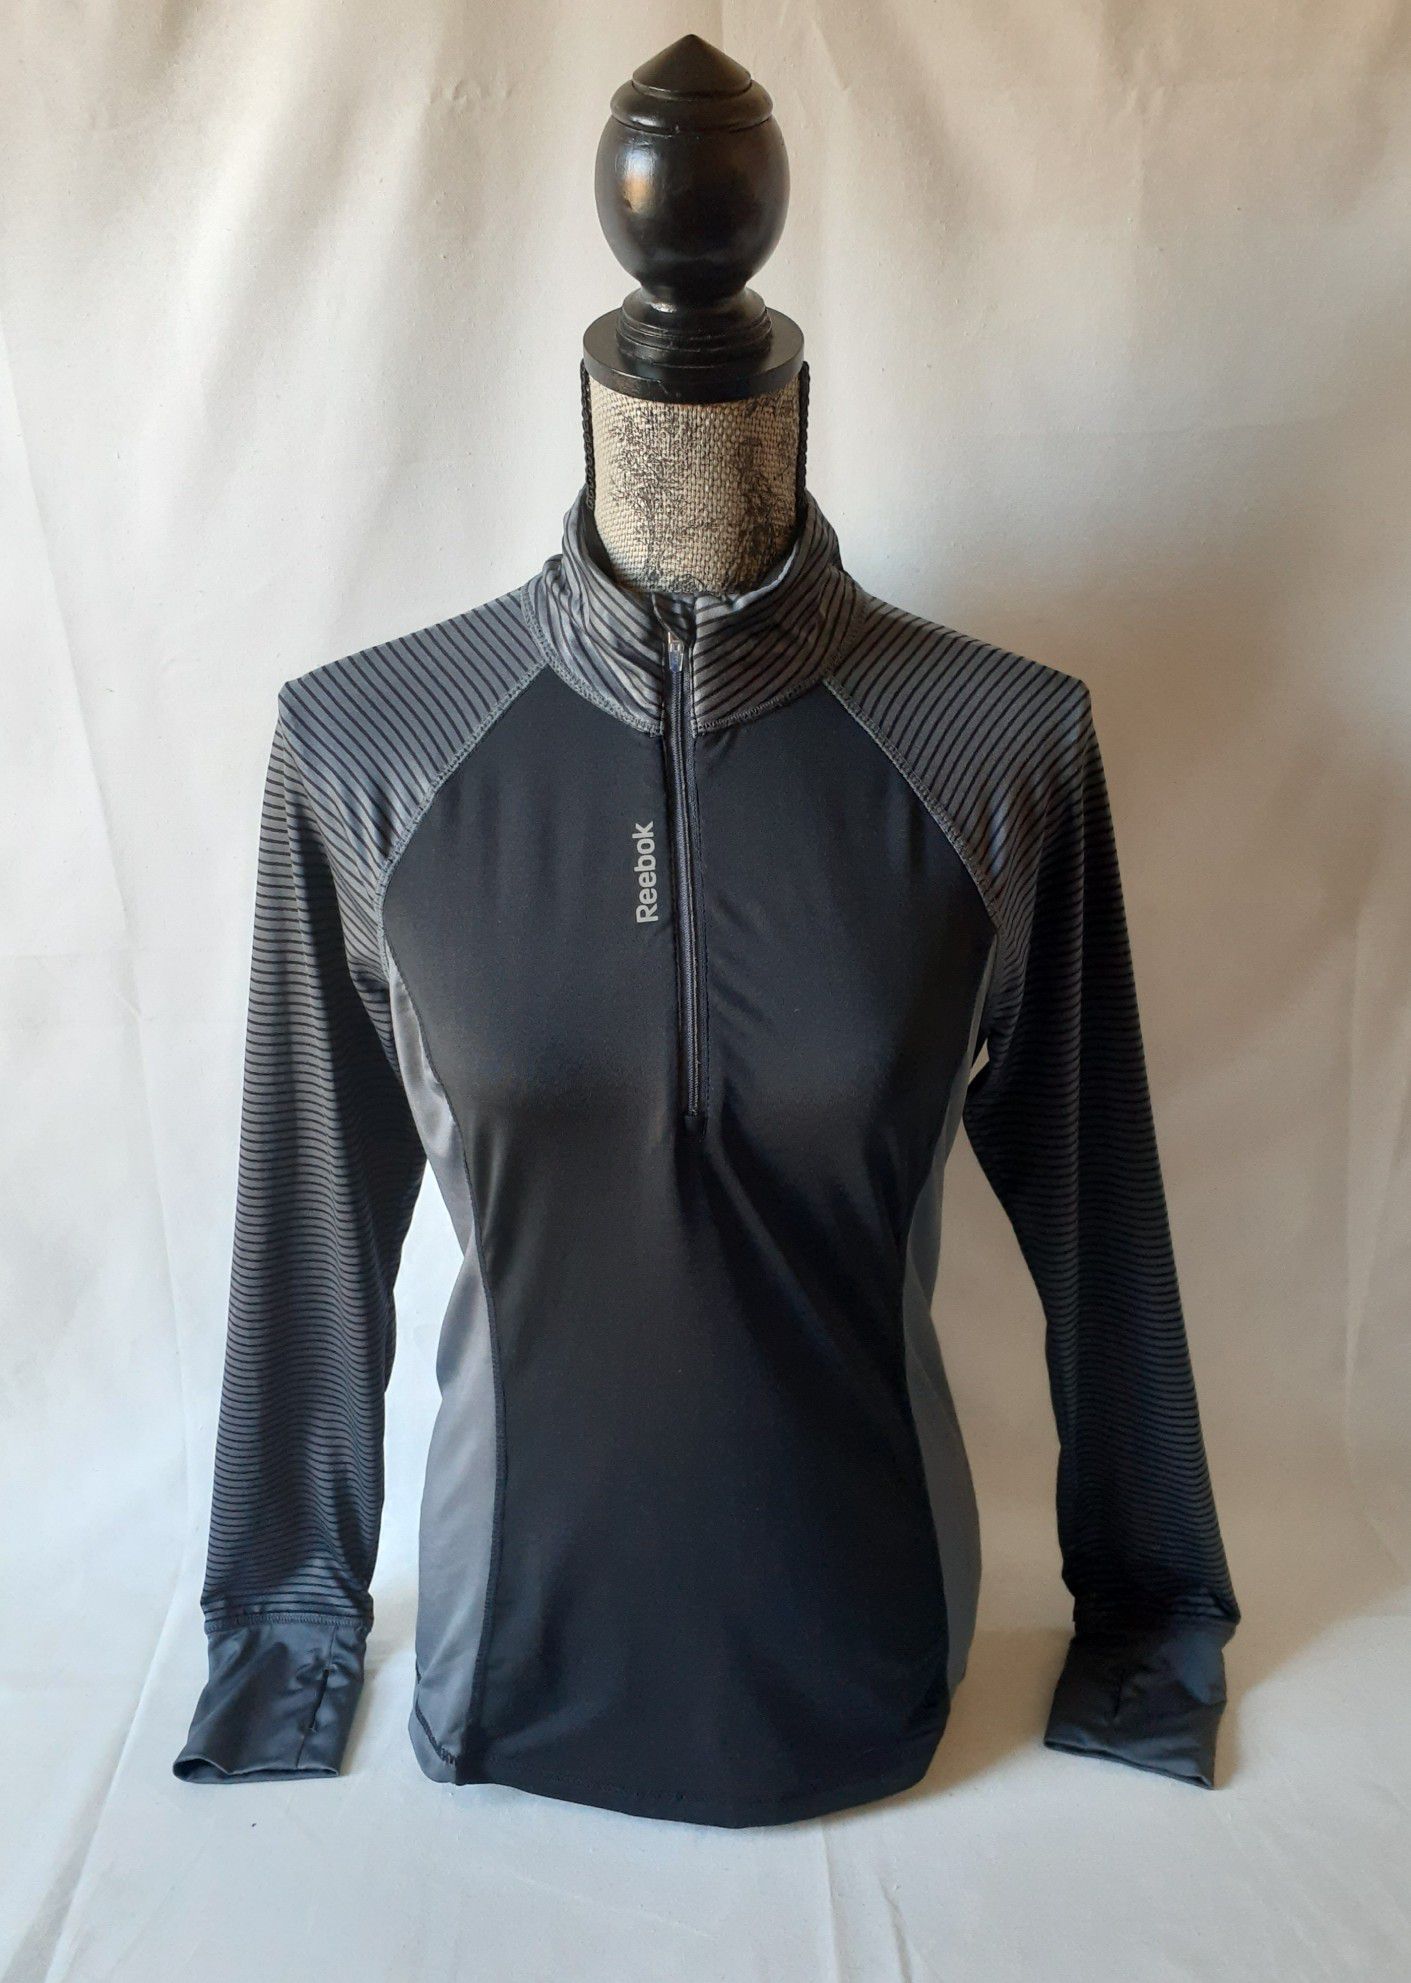 Reebok women's black/gray long sleeve1/4 zip athletic top size S